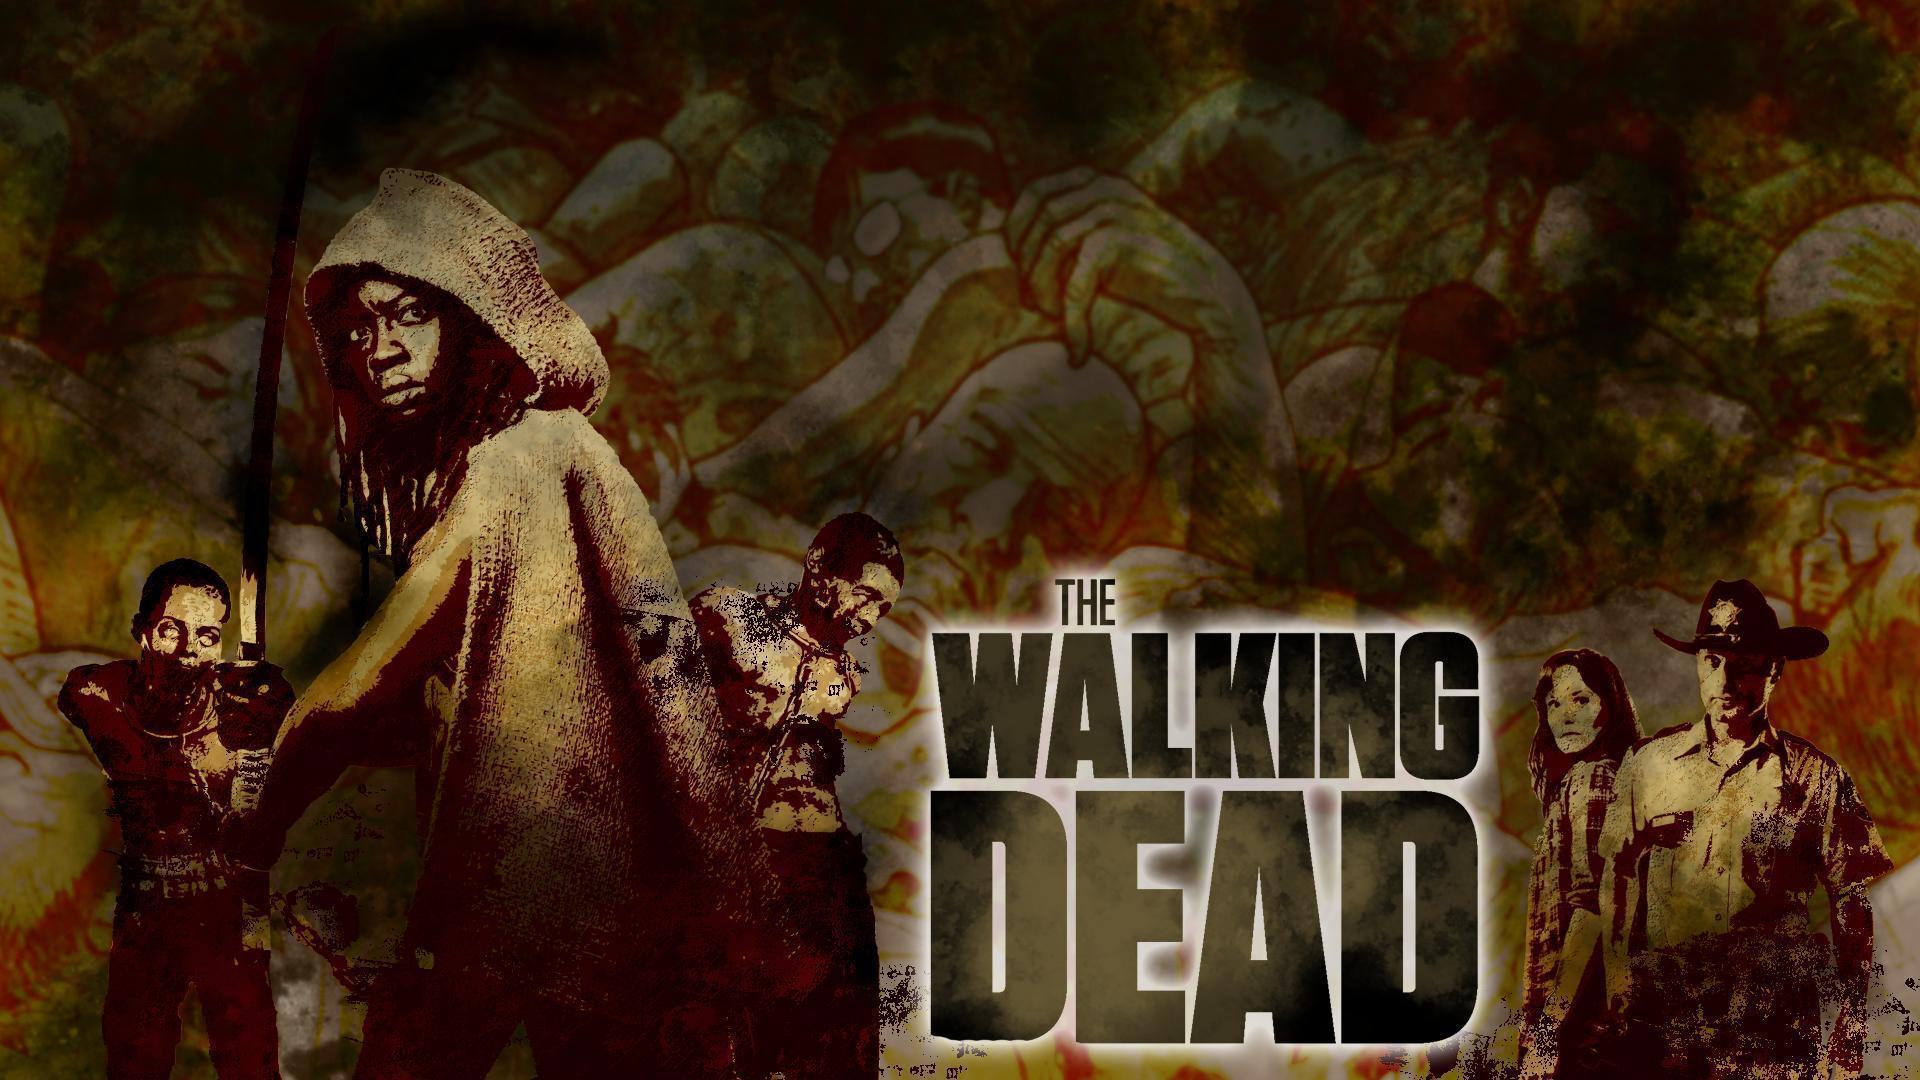 The Walking Dead Archives Wallpaper Free DownloadHD